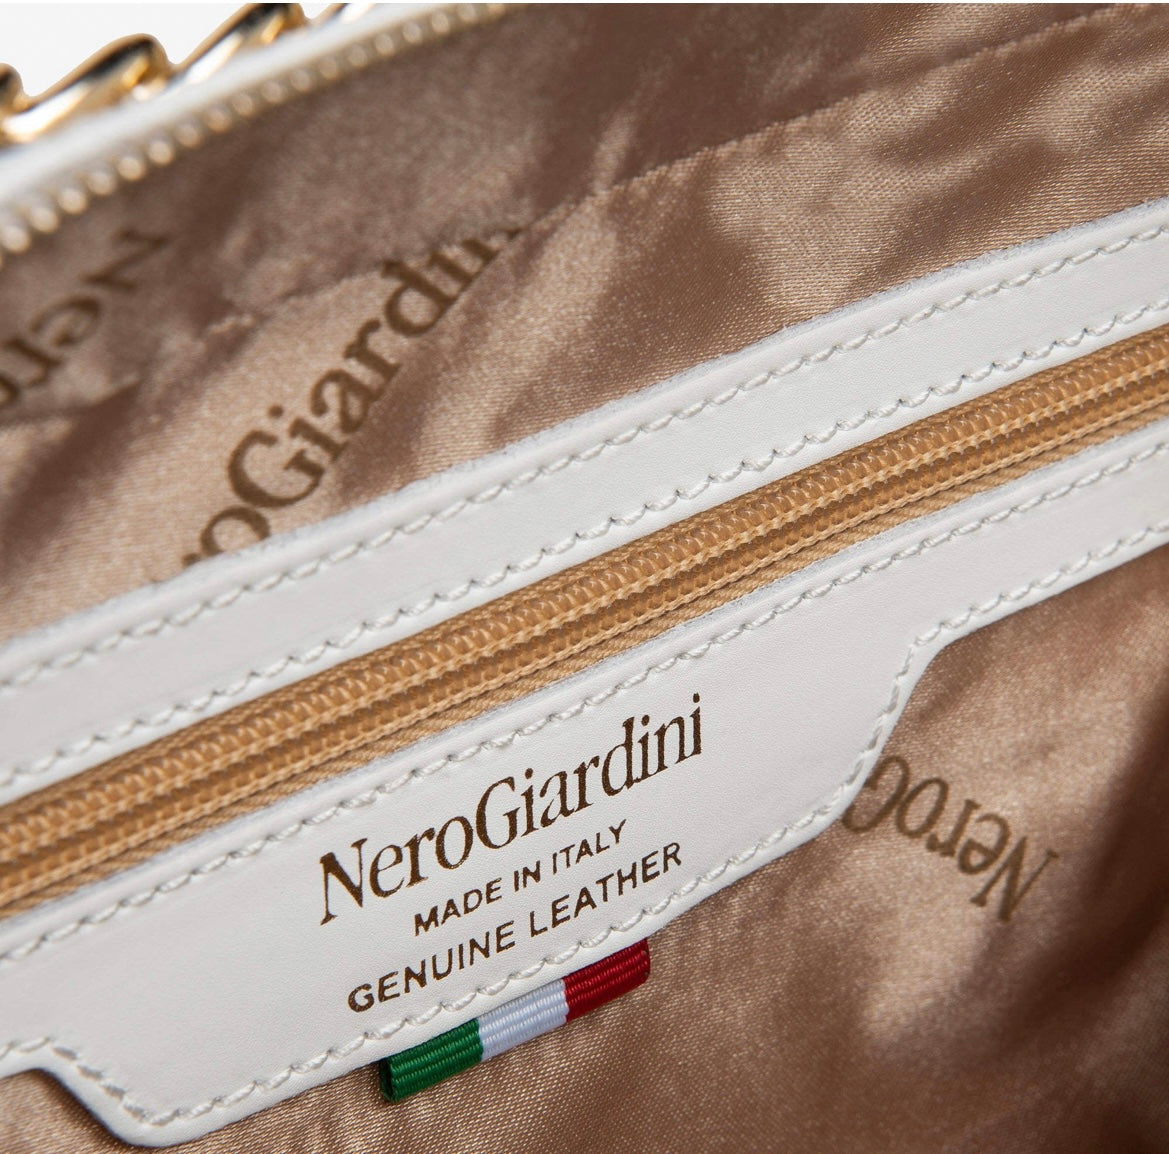 Nerogiardini white leather shoulder bag